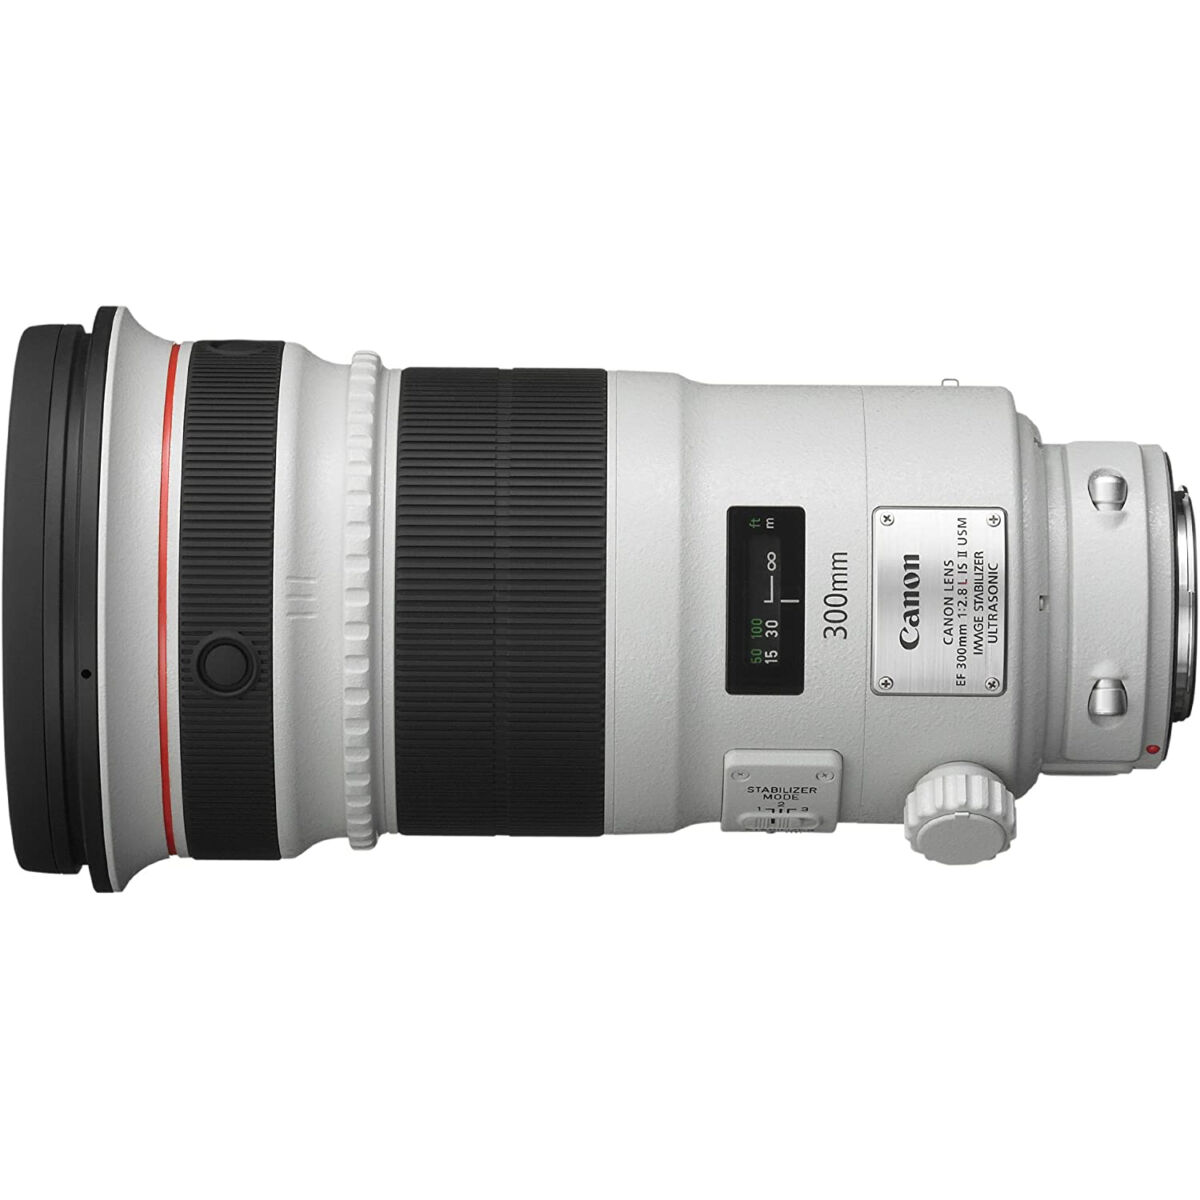 Canon EF 300mm F2.8 L USM